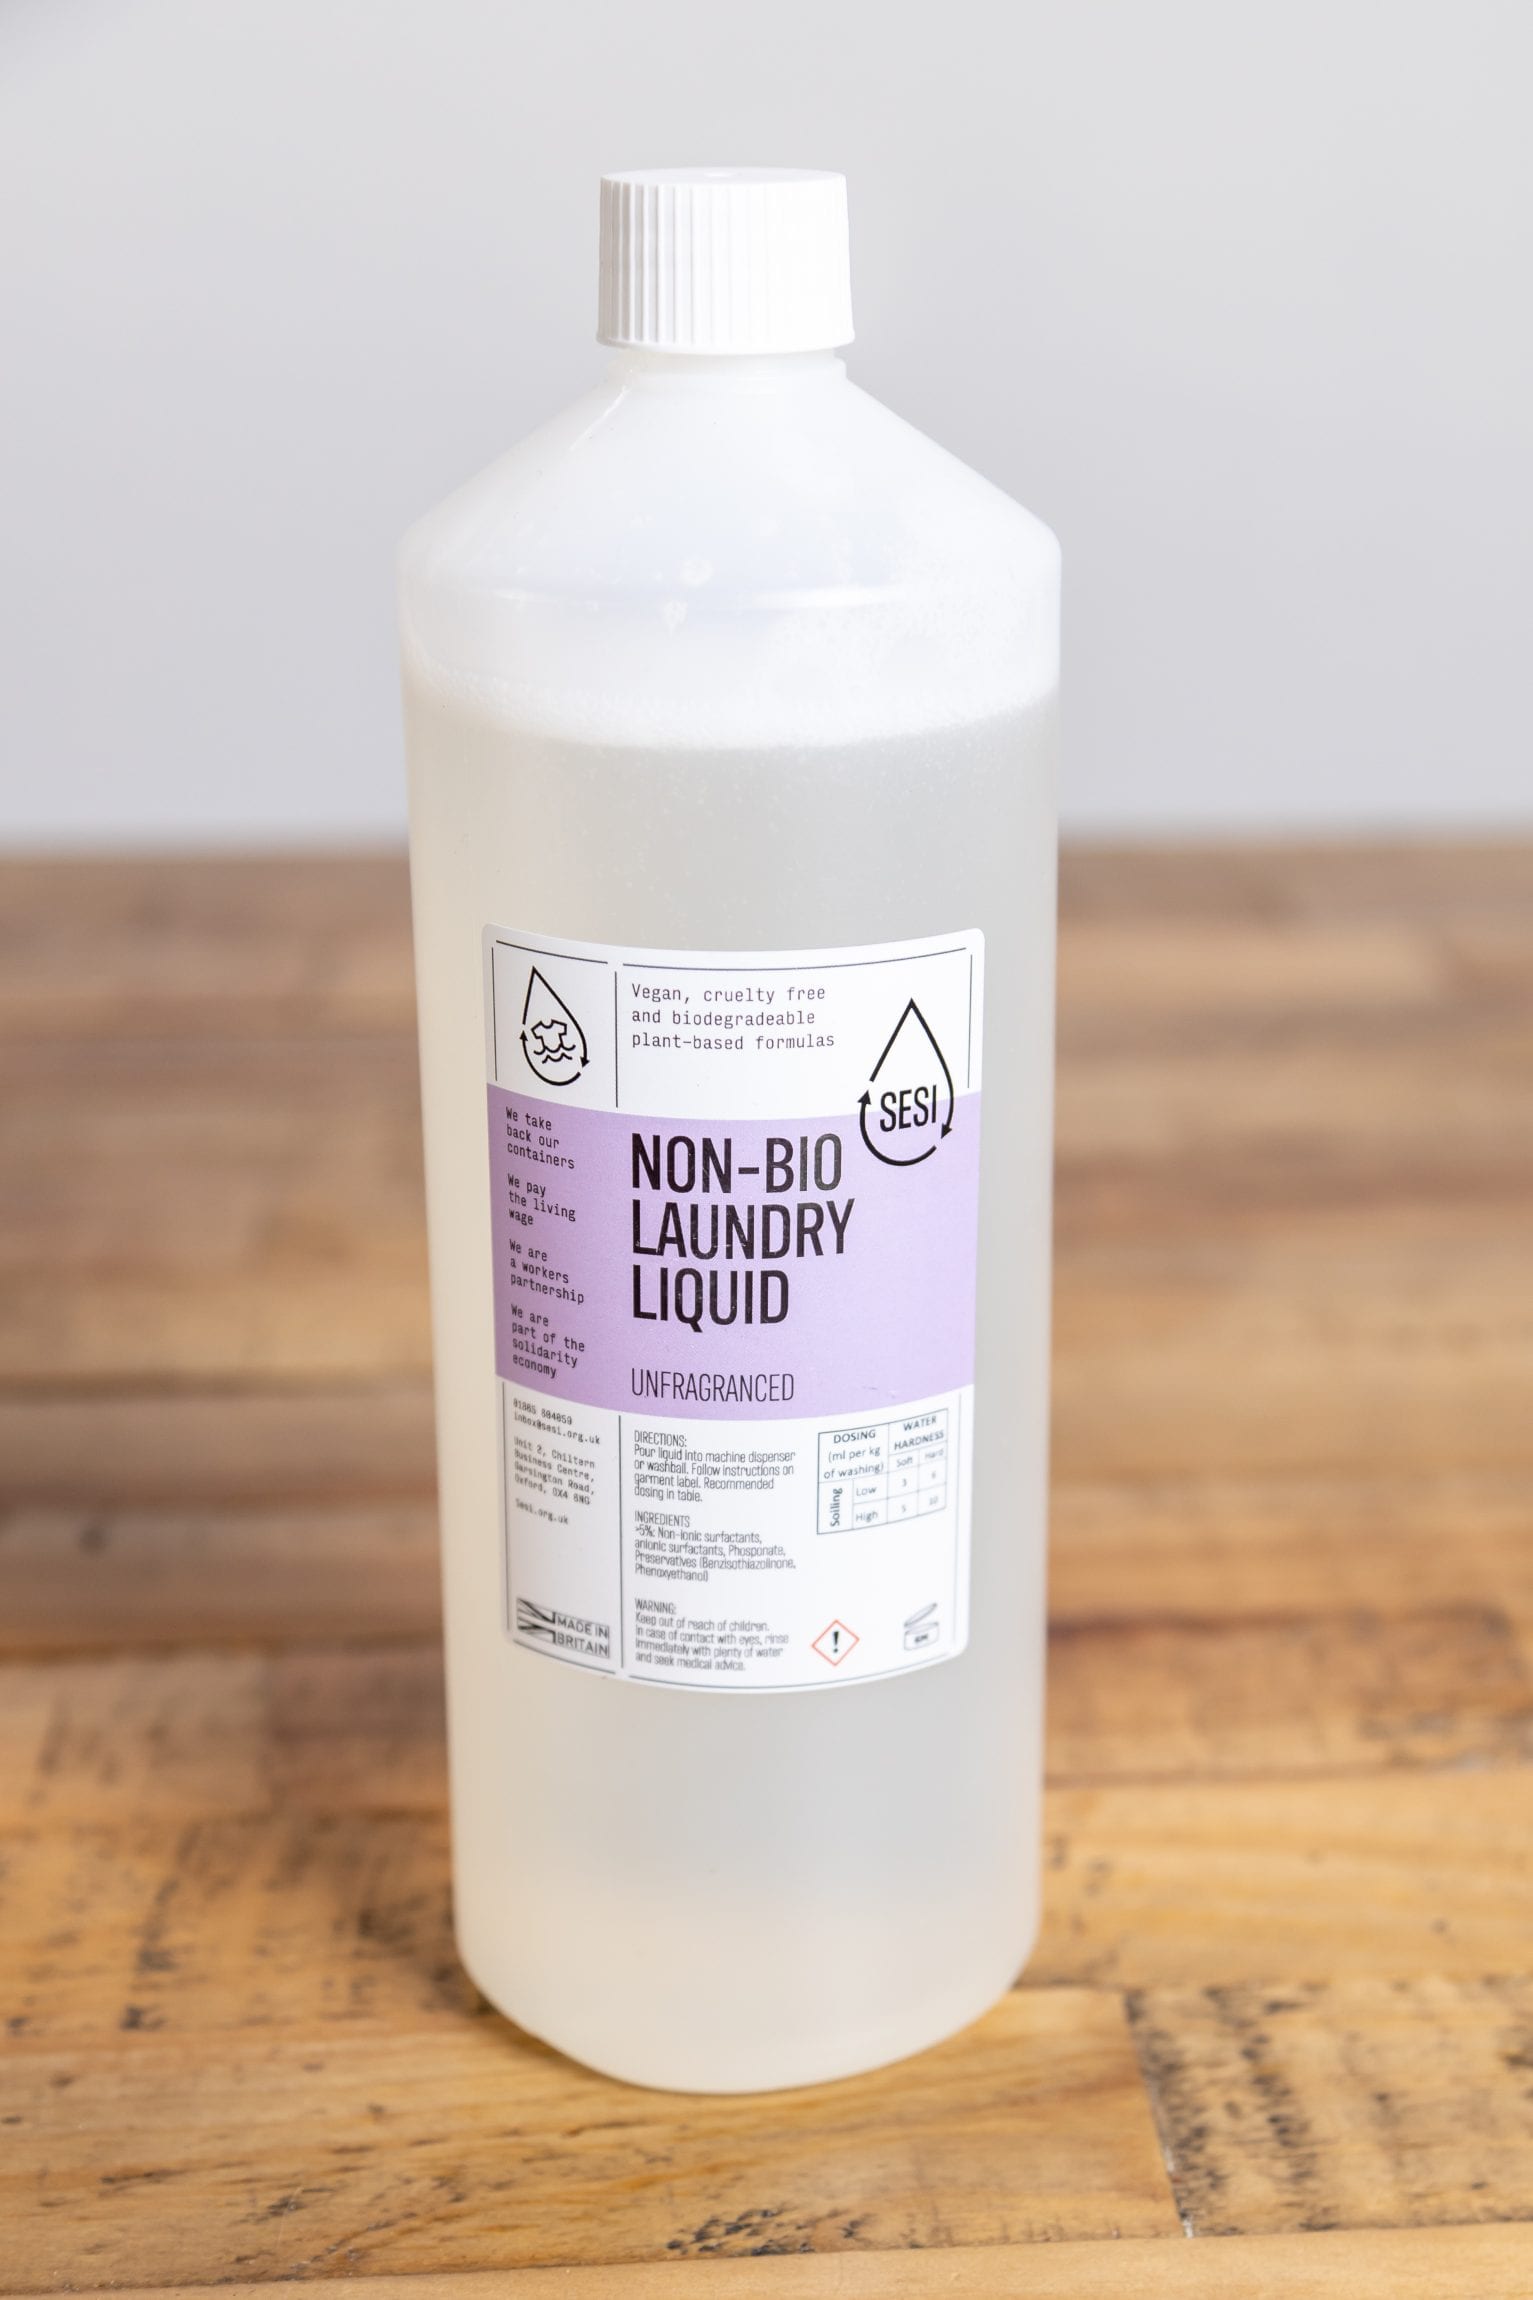 Non-Biological Laundry Liquid